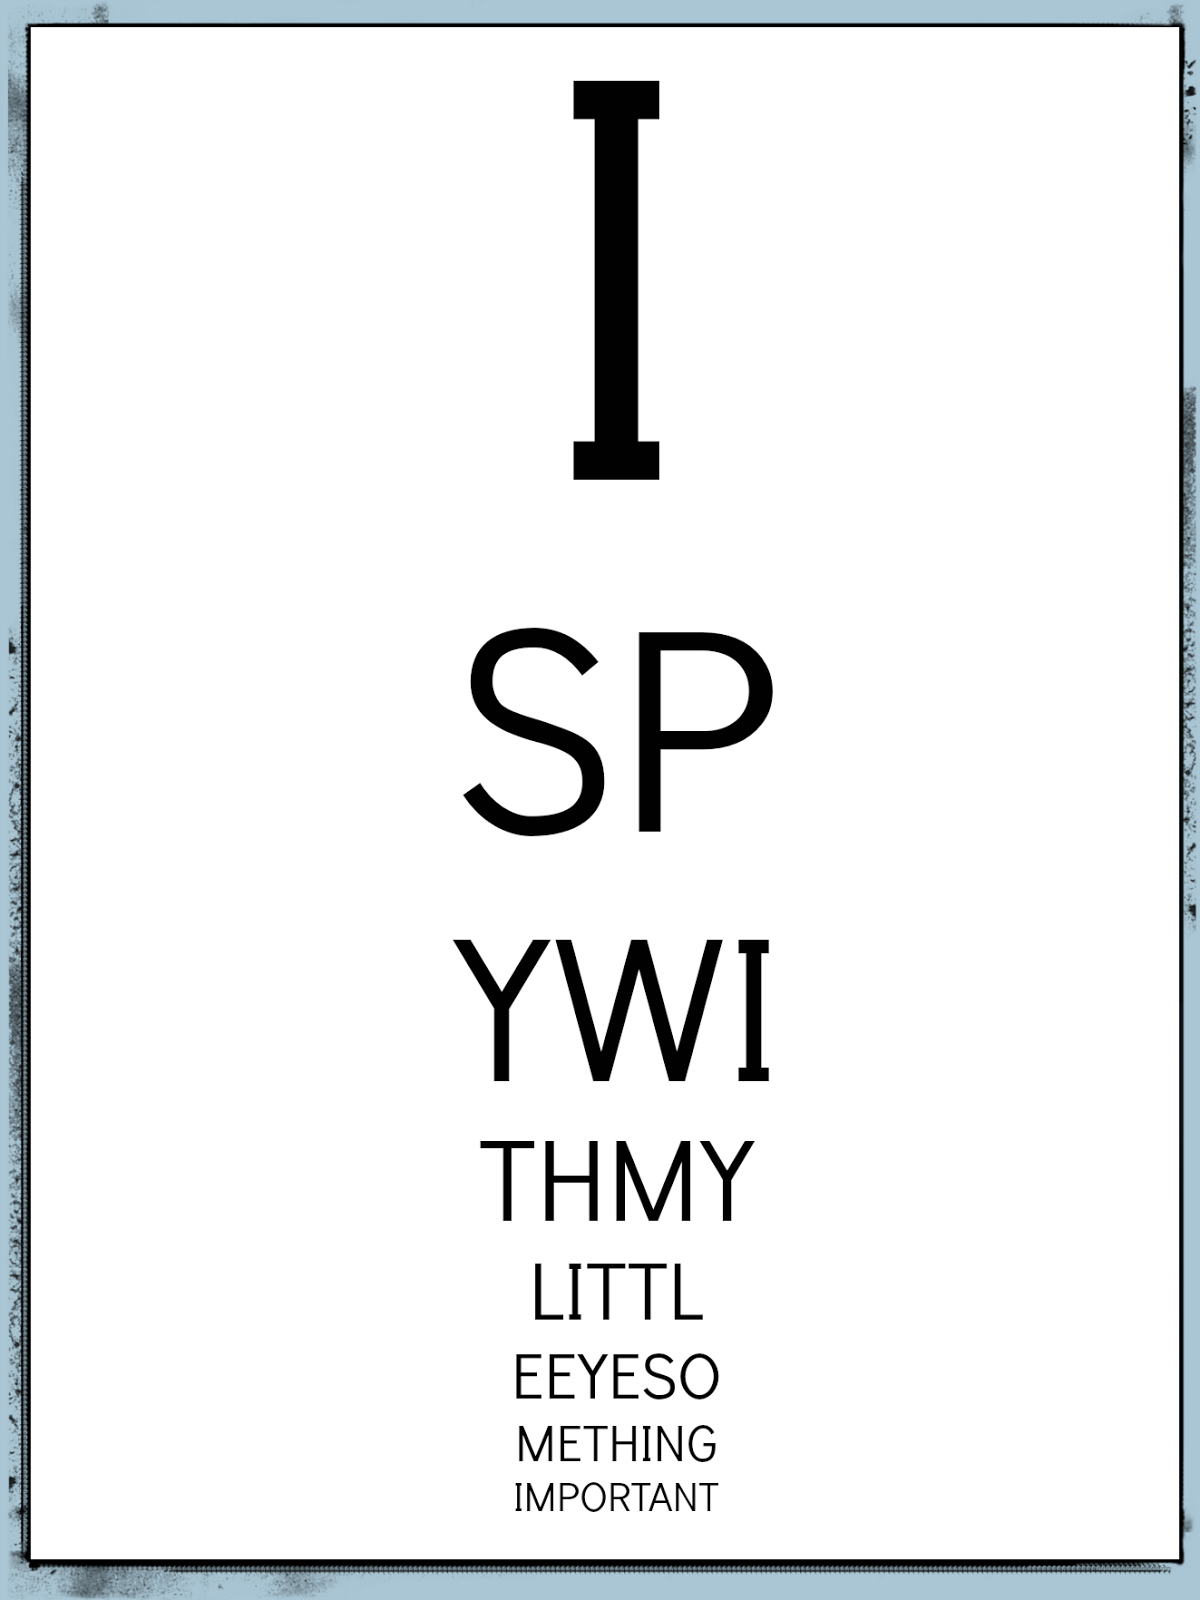 Say “Eye” If You’ve Had An Eye Exam Lately